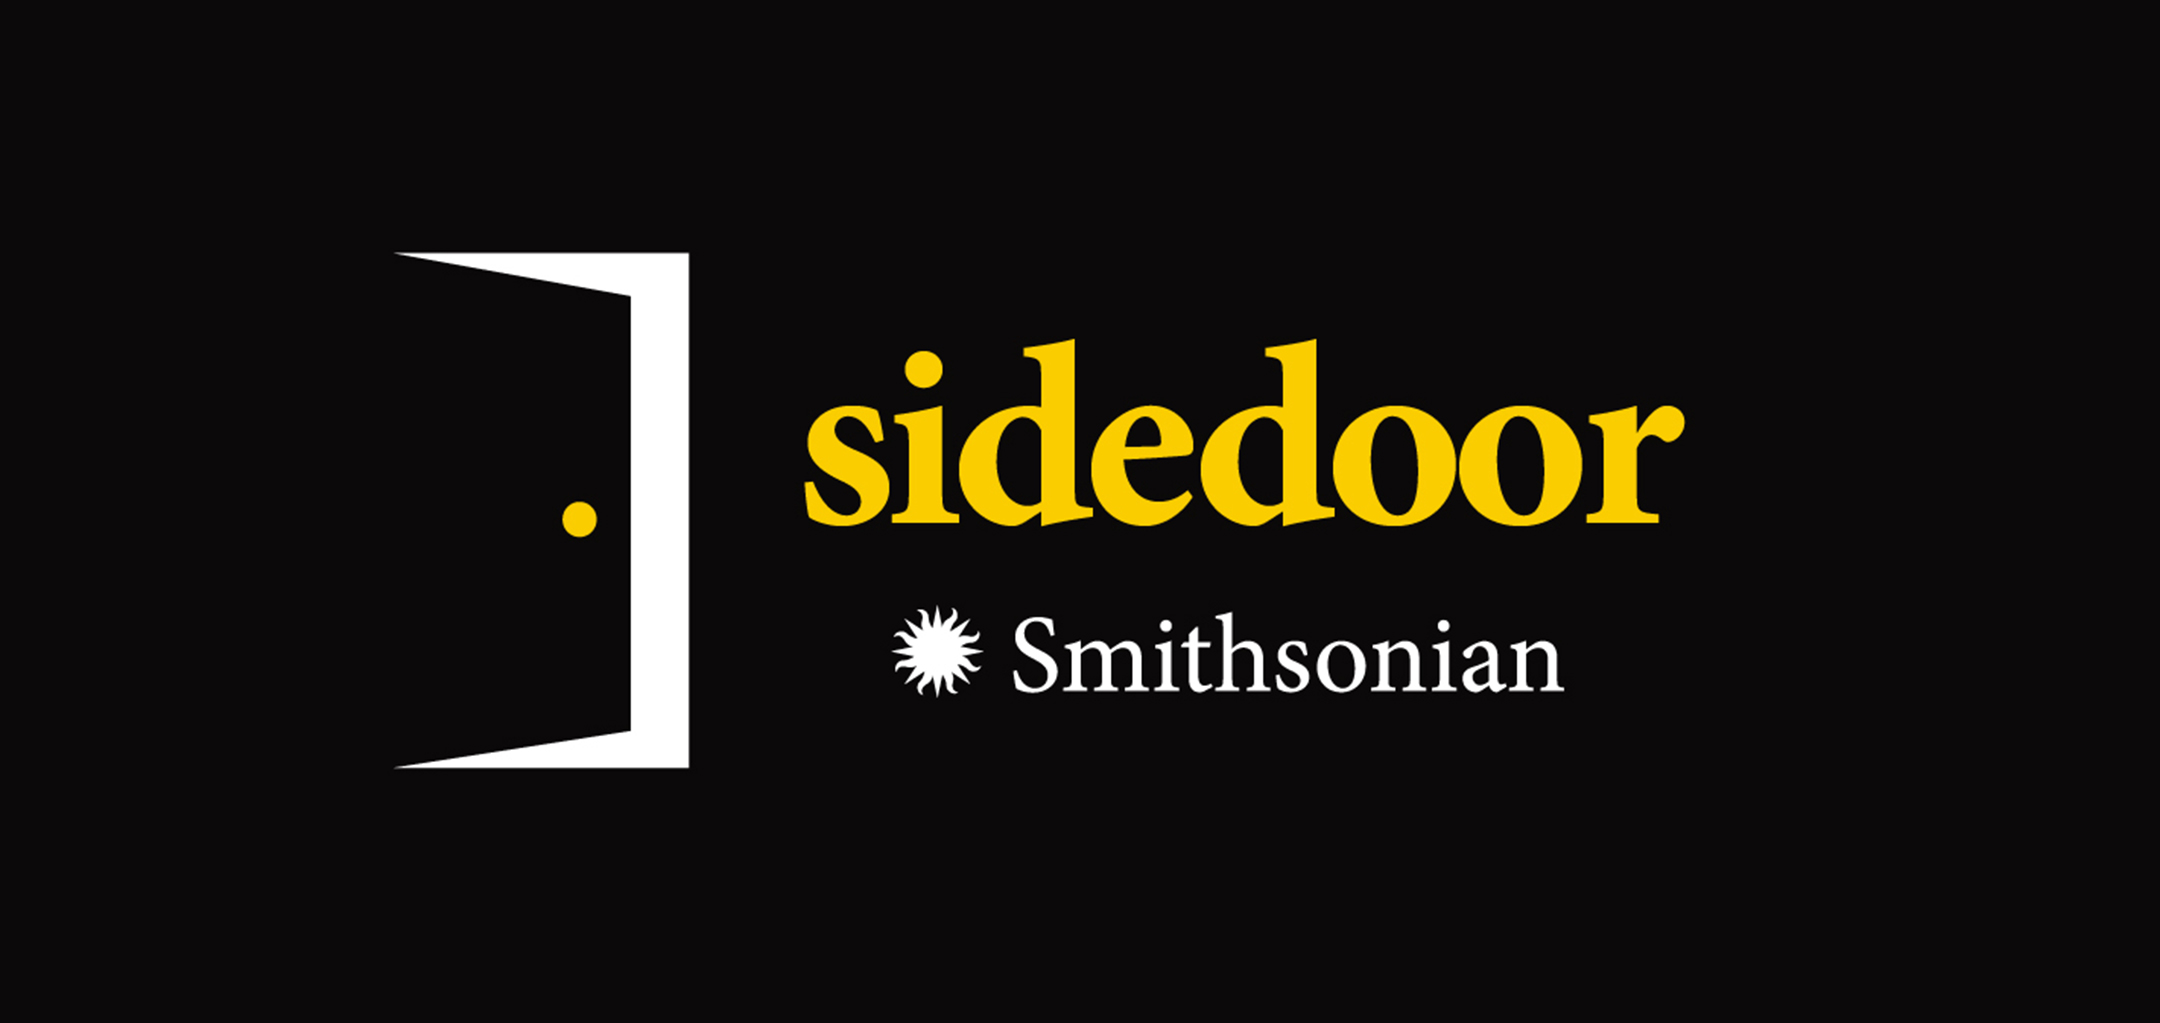 sidedoor logo